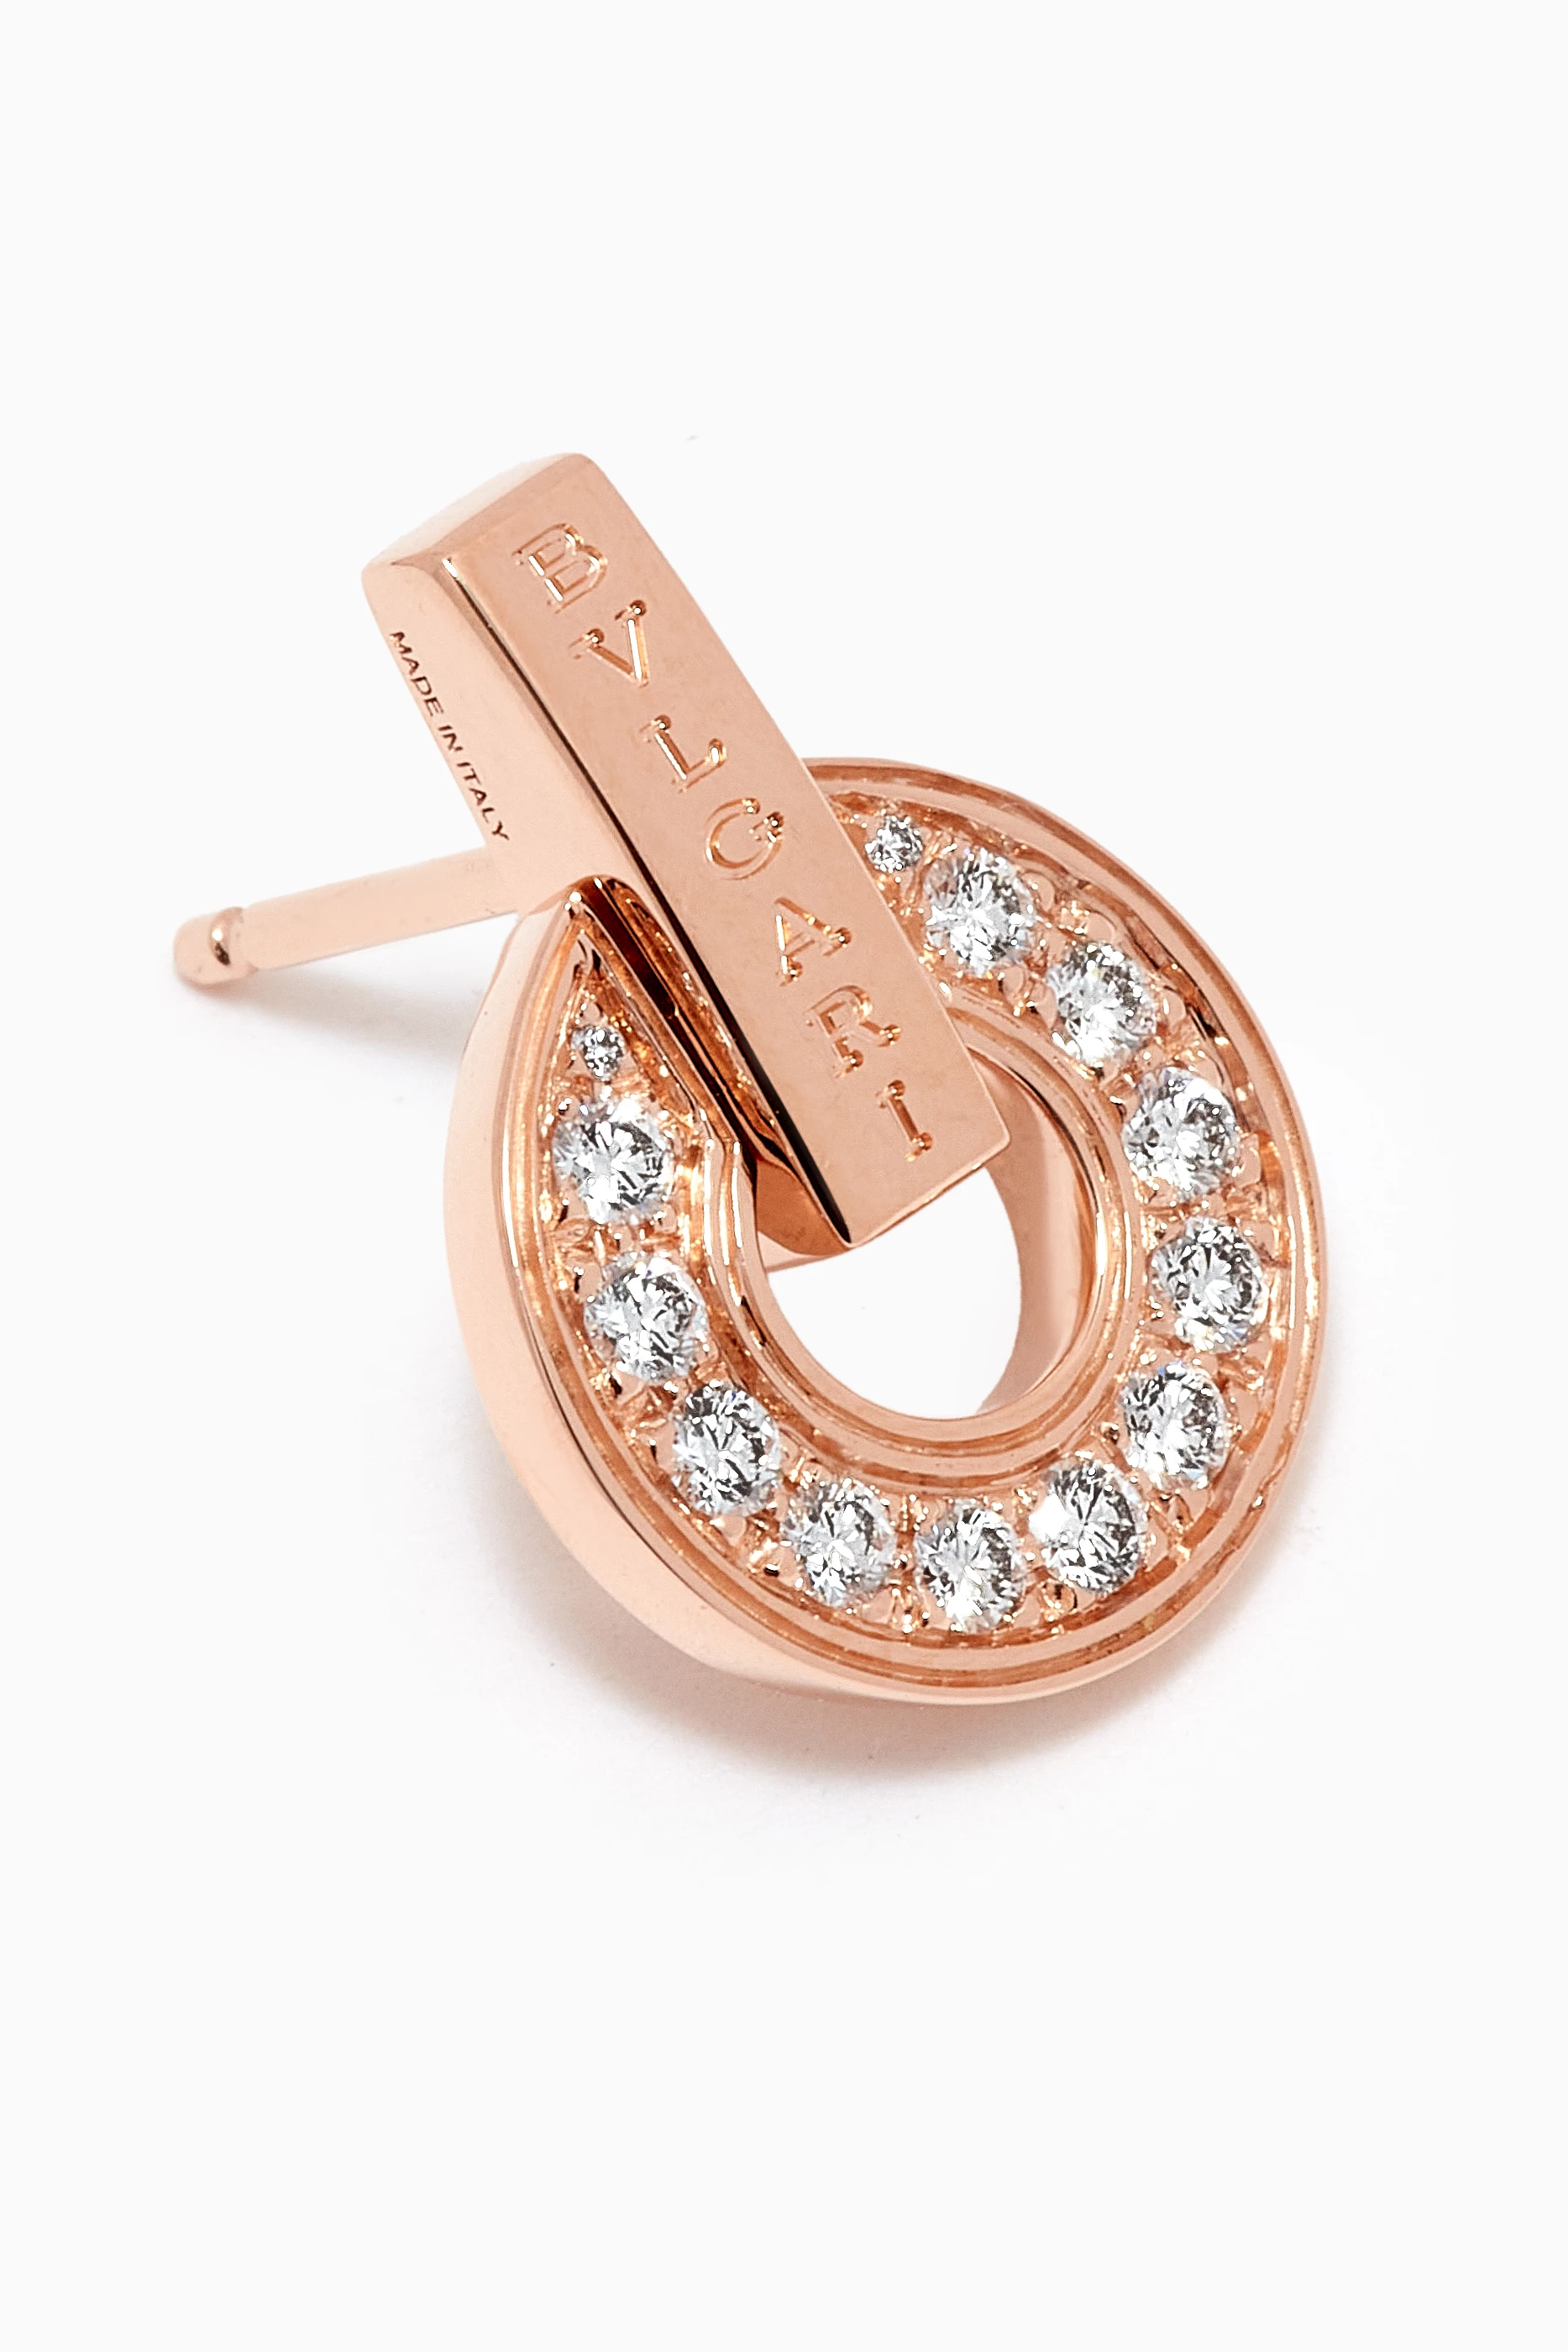 Rose gold BVLGARI BVLGARI Earrings Pink with 0.38 ct Diamonds